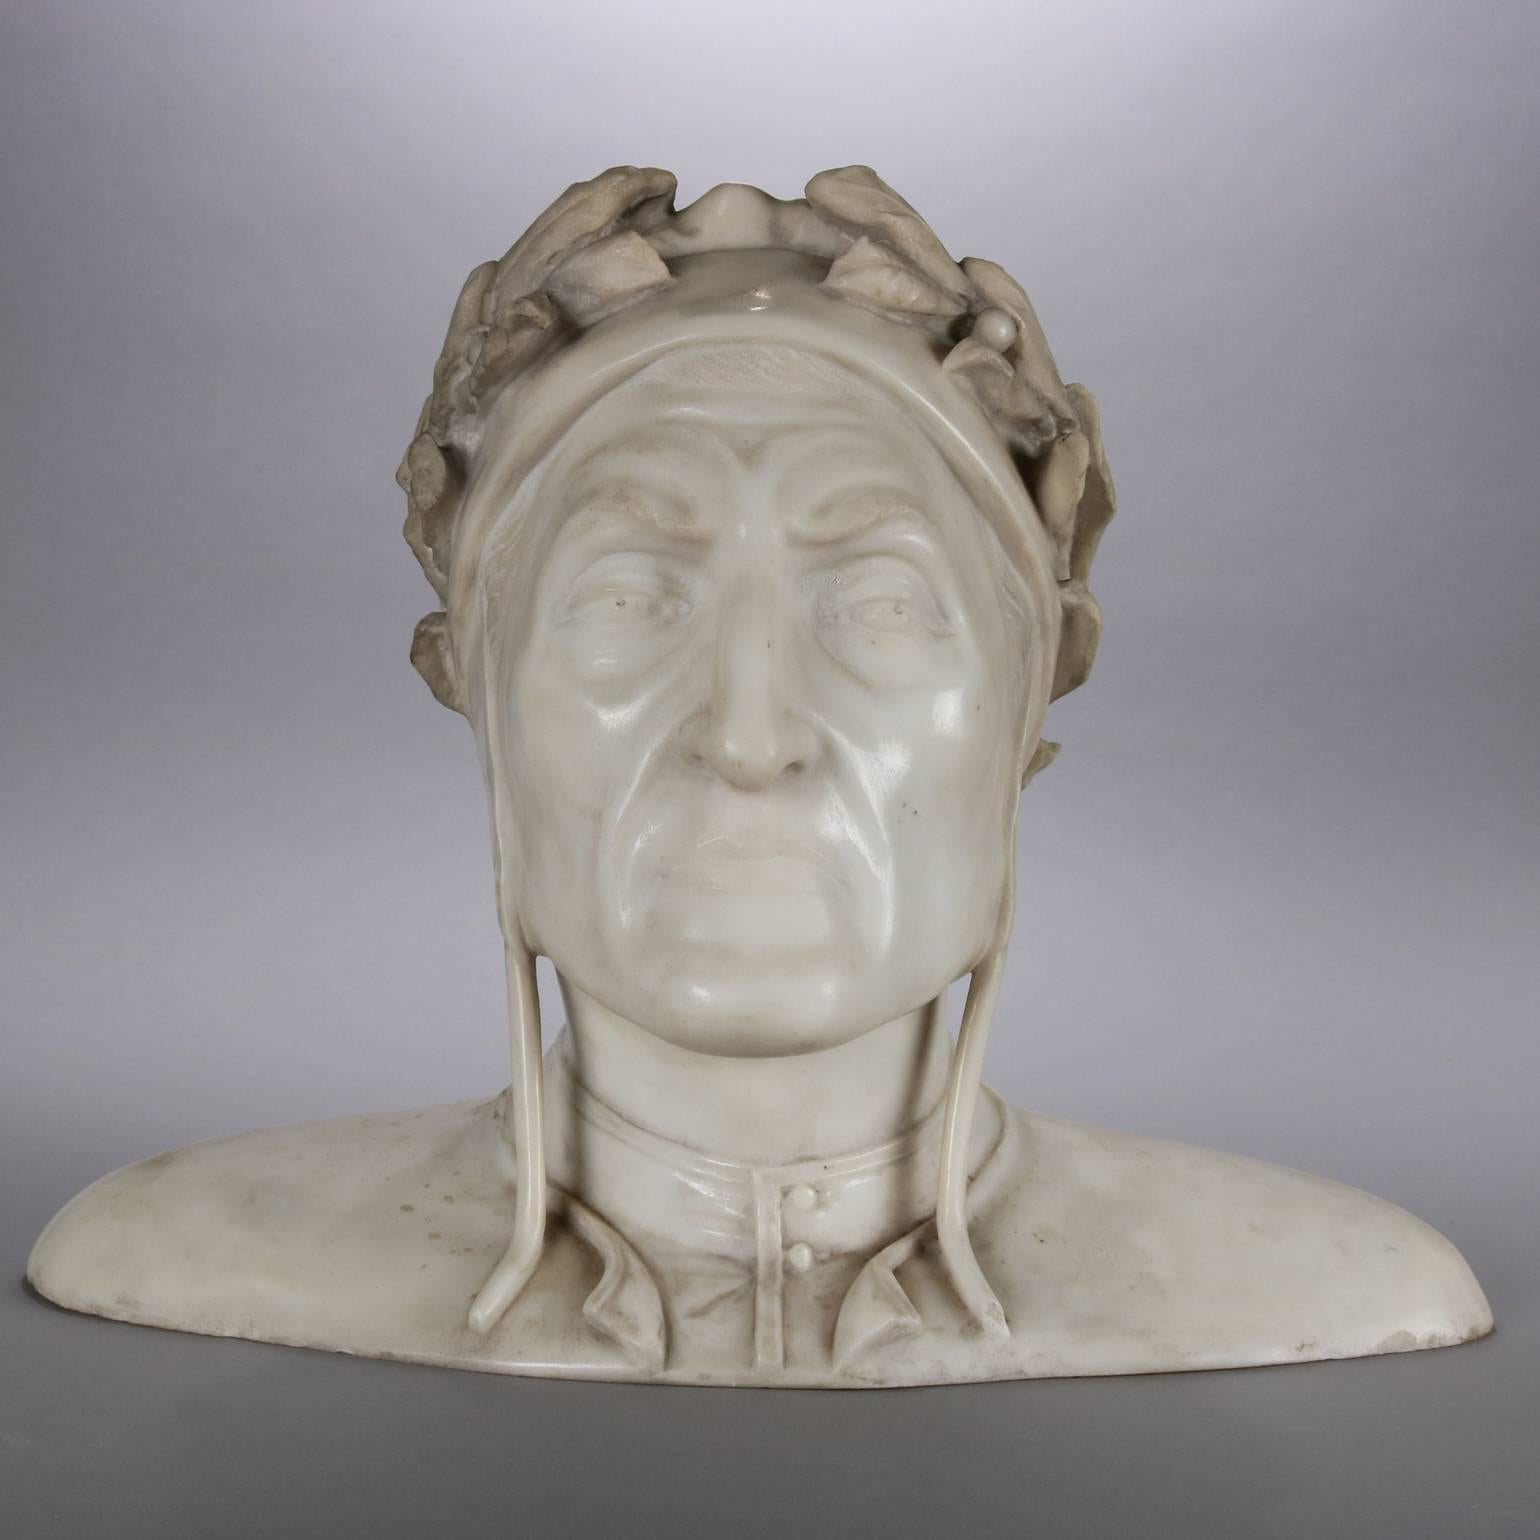 Antique and fine Italian hand-carved marble bust sculpture of Dante Alighieri, 19th century

Measures: 12.5" H x 16" W x 7.5" D

Biography:
Durante degli Alighieri (Italian: [du'rante de?? ali'gj??ri]), simply called Dante